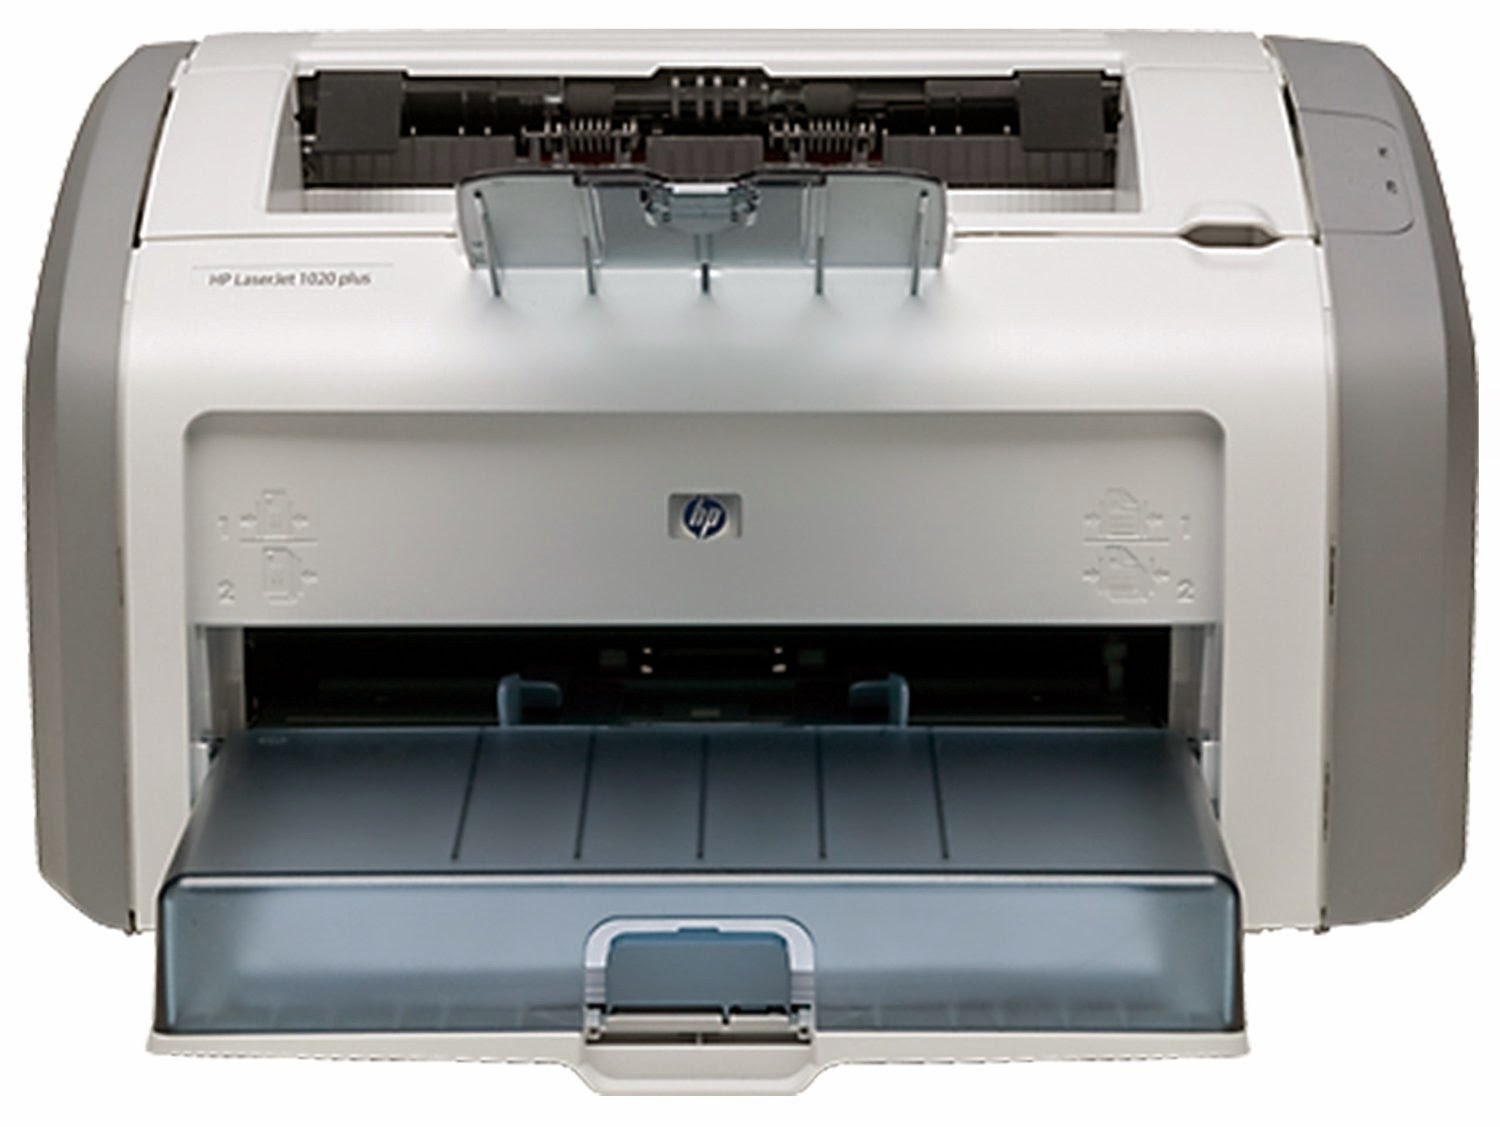 HP LaserJet 1020 Plus Printer Driver Series Support Download ...